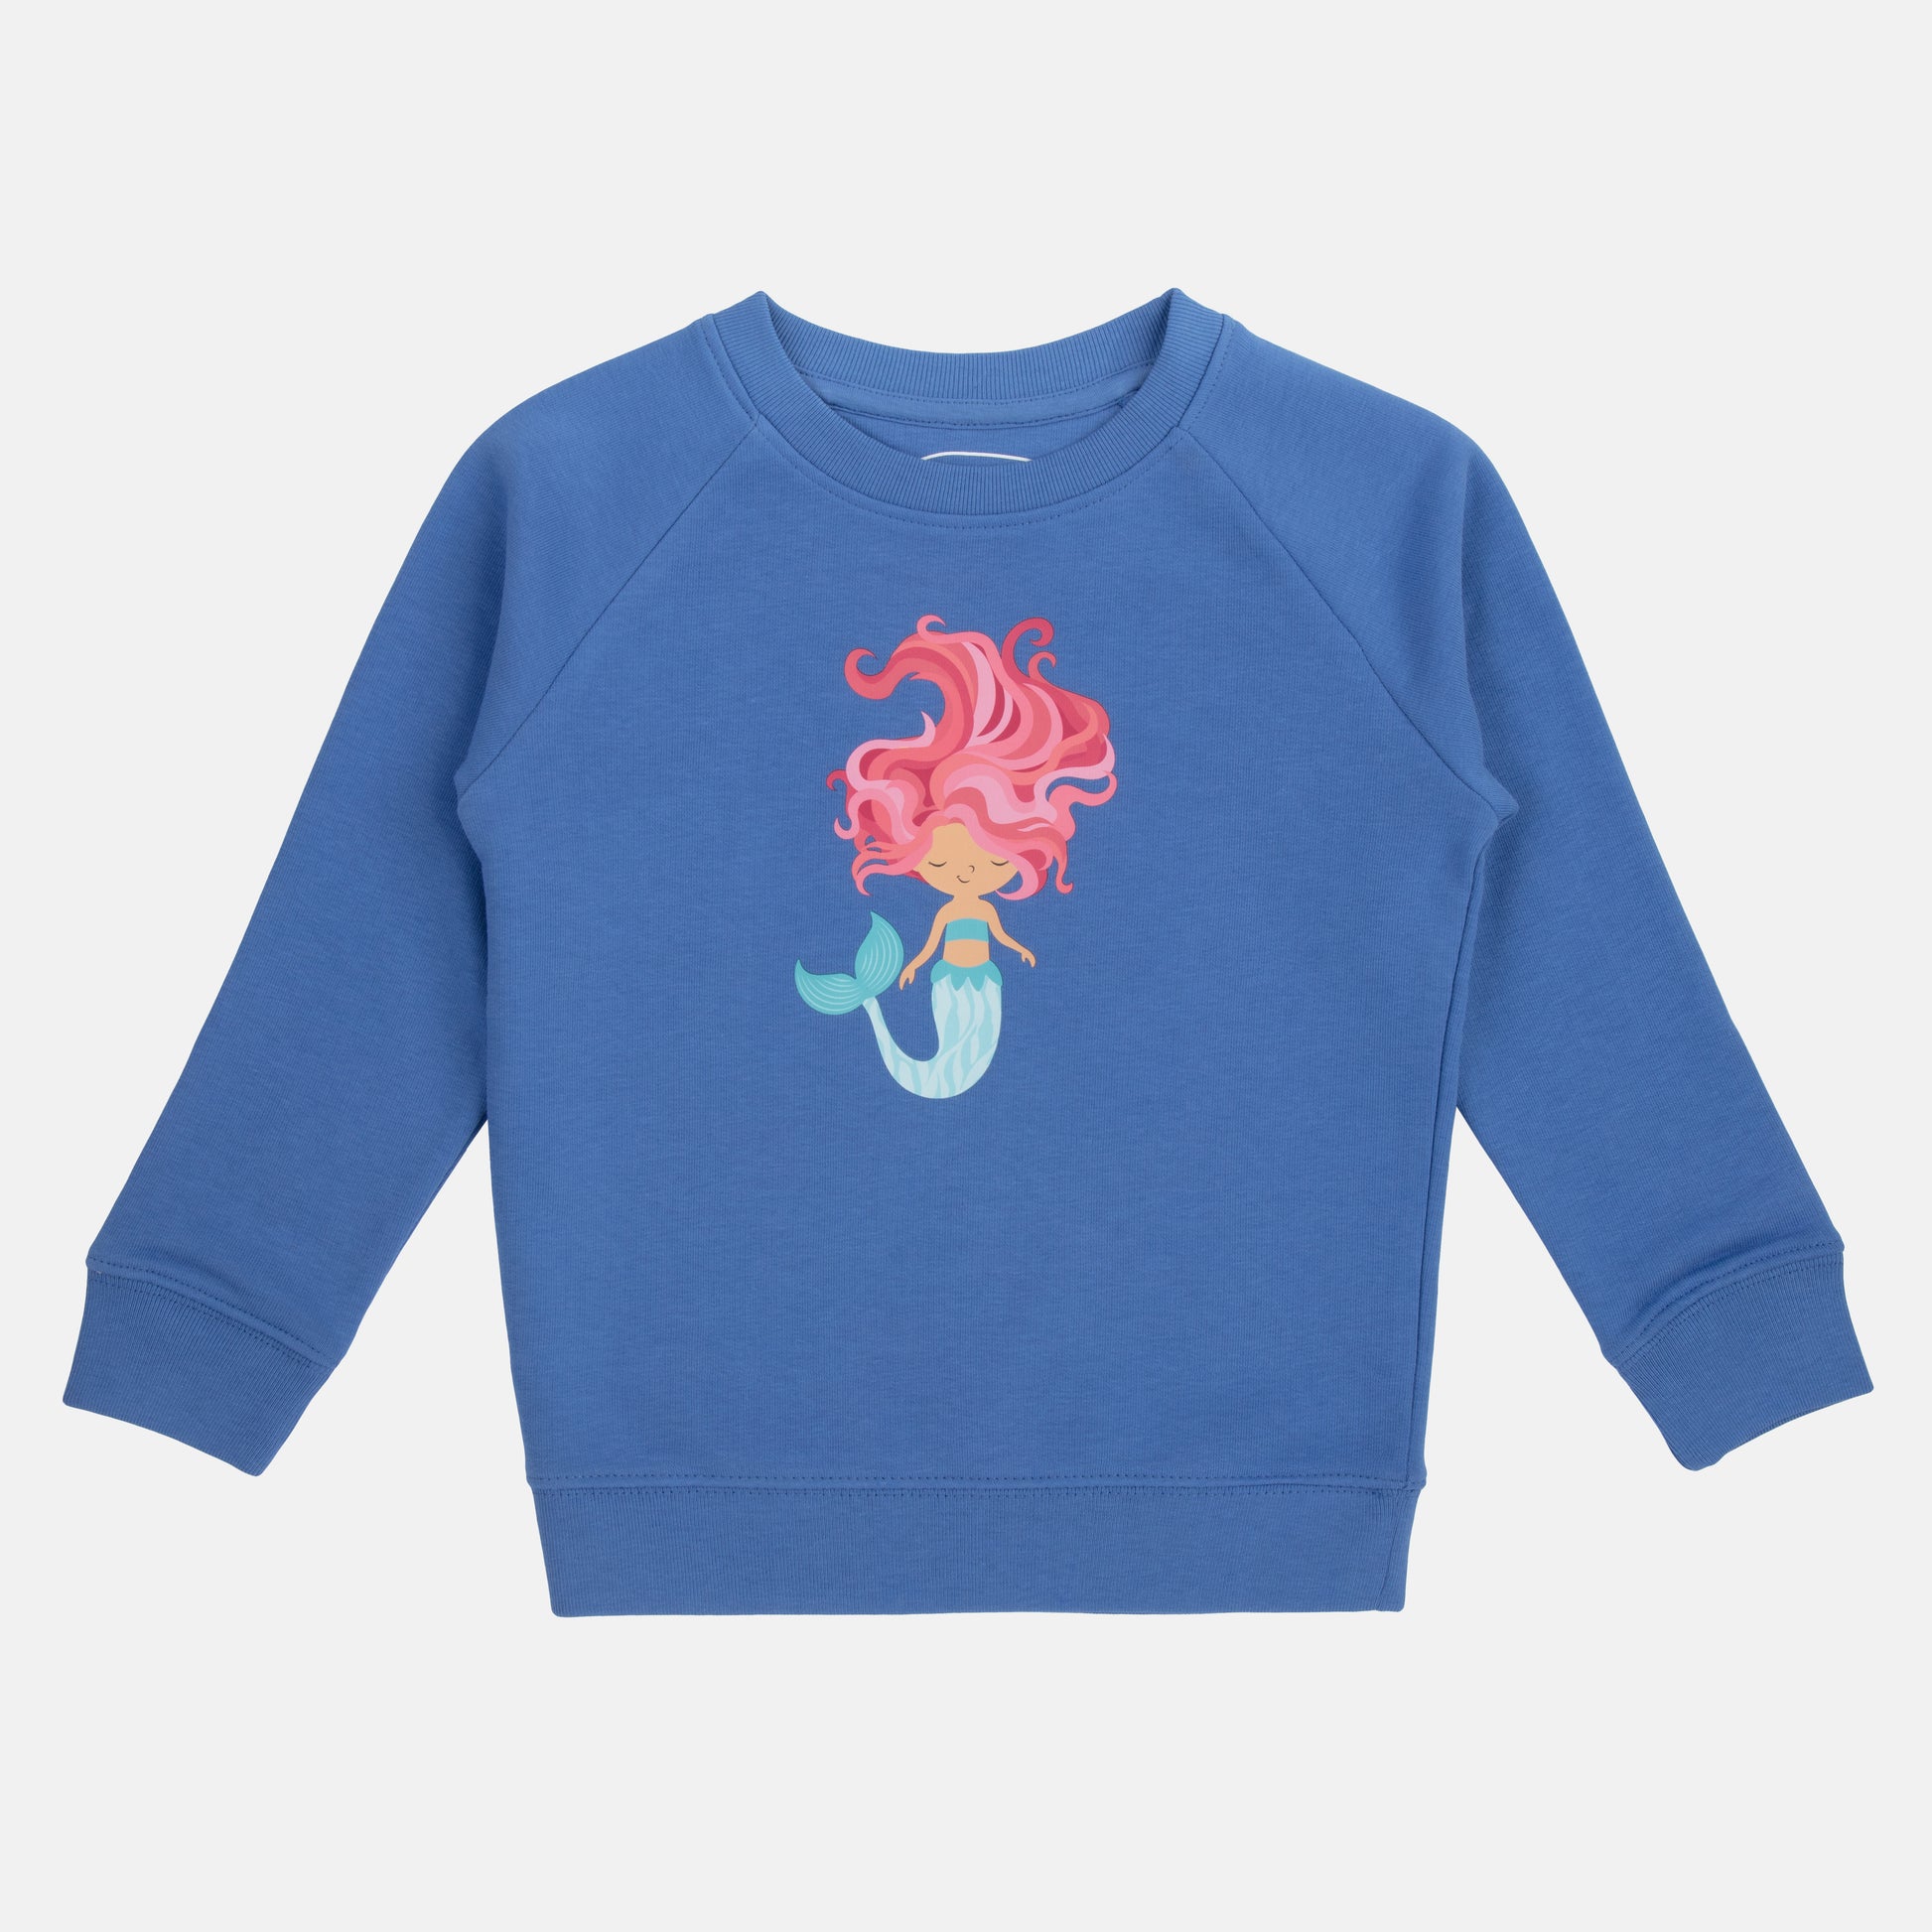 Who said nachhaltiger Sweater in Blau mit Meerjungfrau